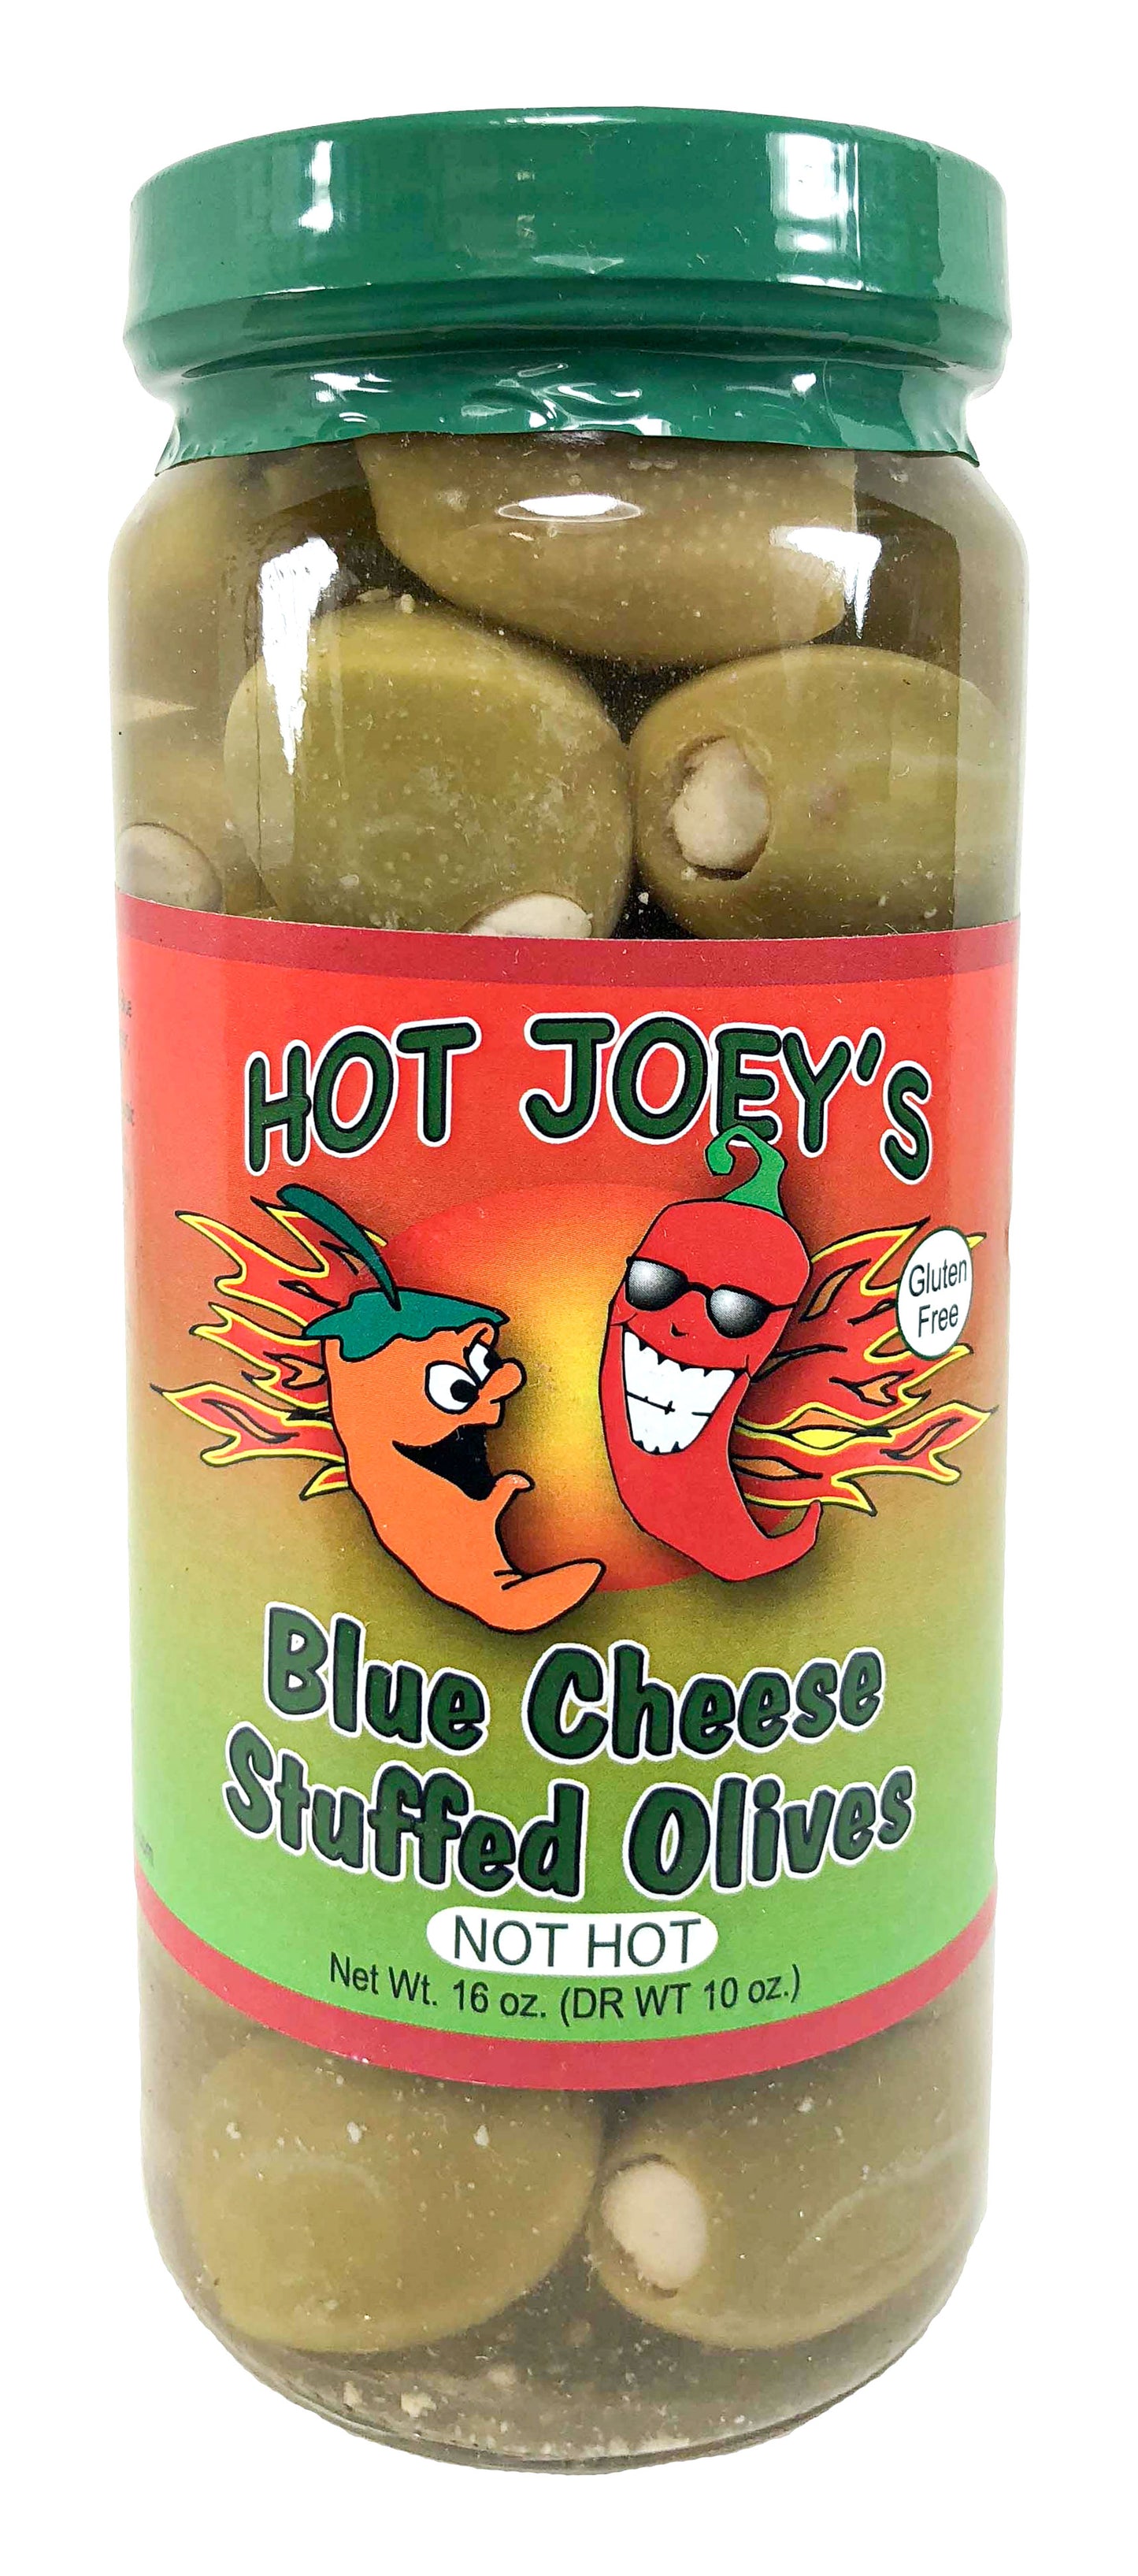 Hot Joey's Stuffed Blue Cheese Greek Olives 16oz. (Not Hot)